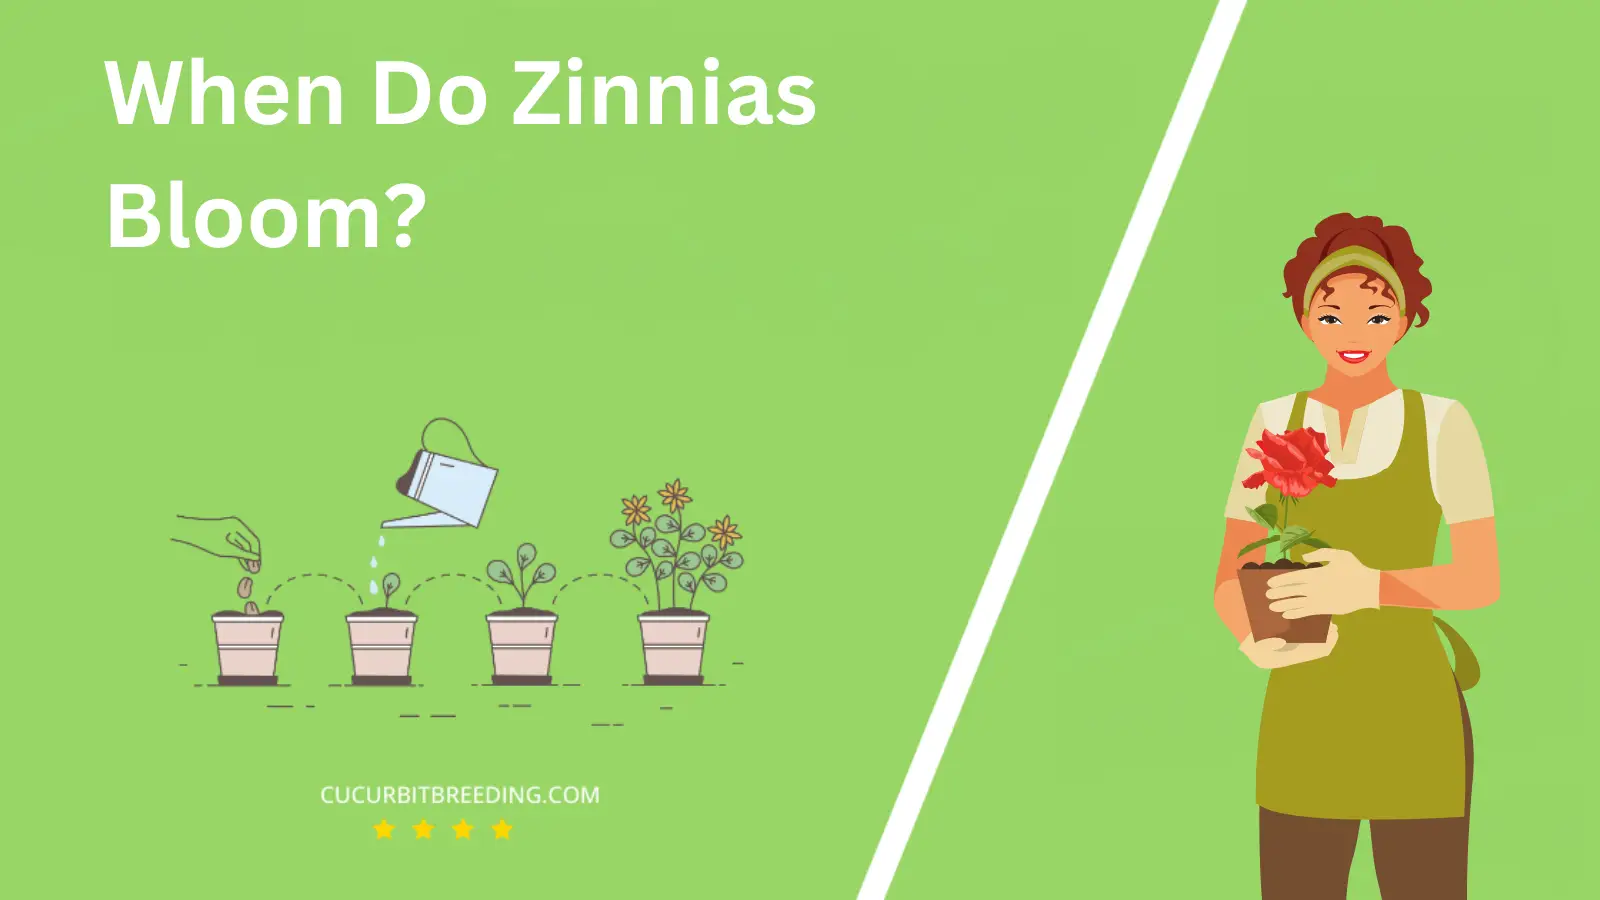 When Do Zinnias Bloom?